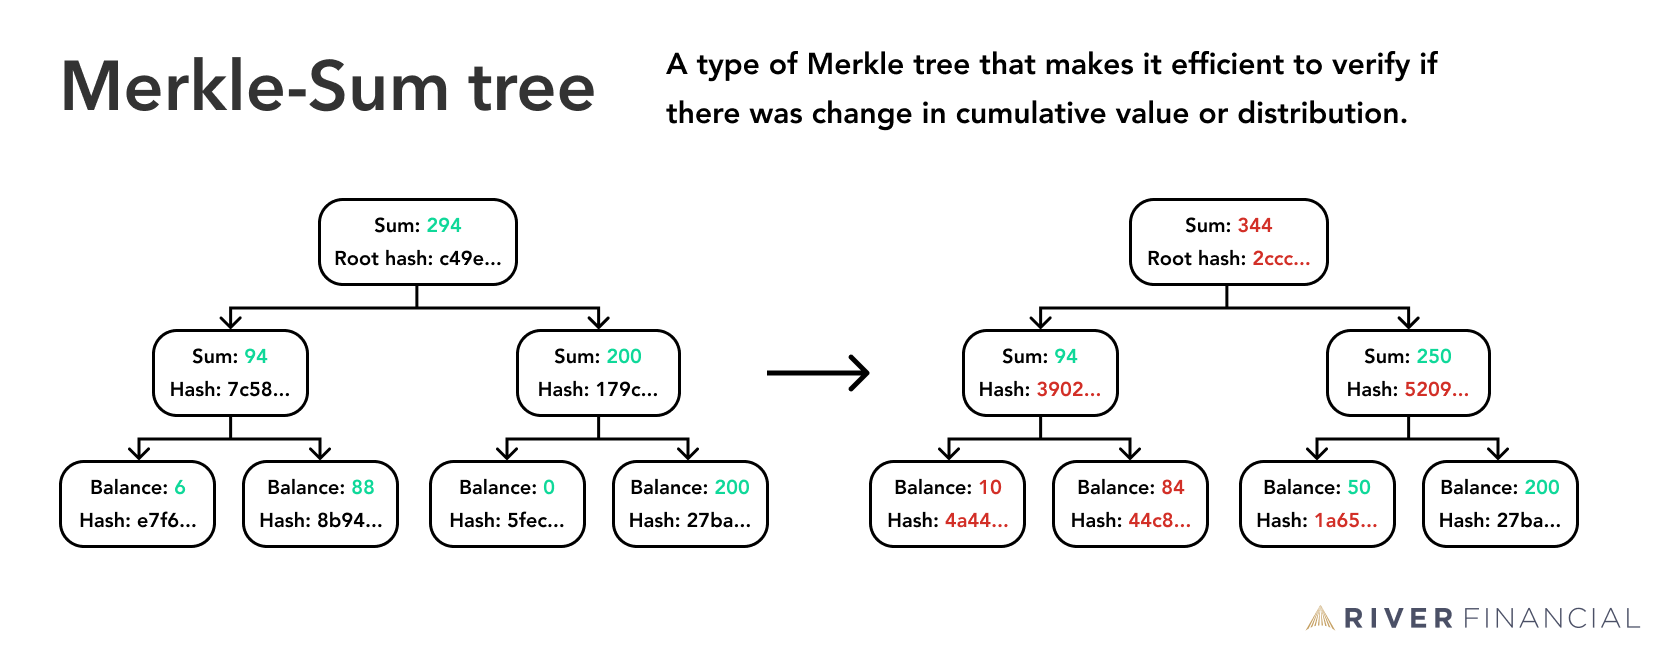 merkle-sum-tree